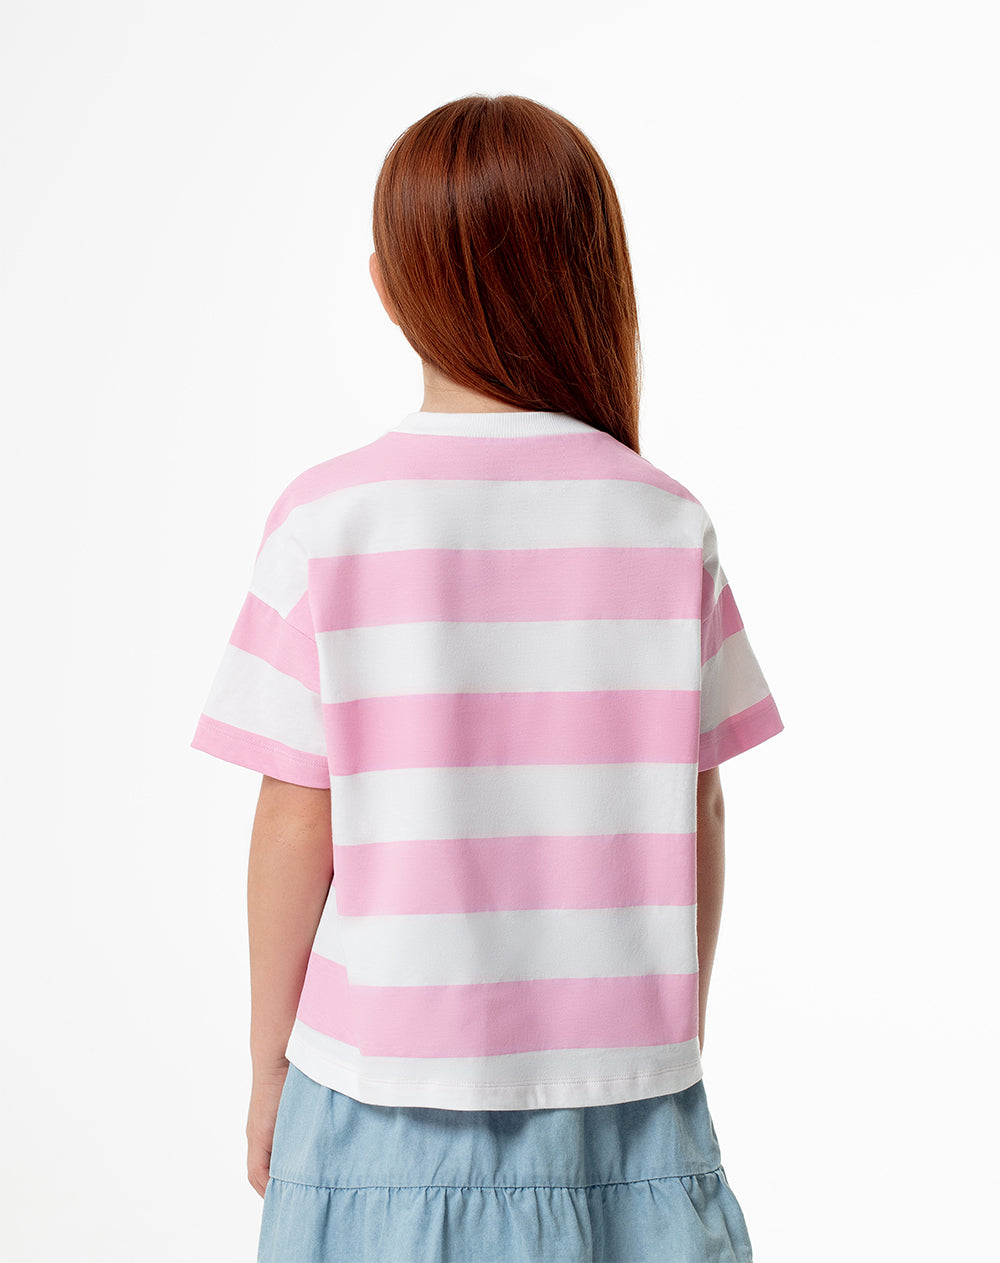 Camiseta regular fit manga corta rosada rayas